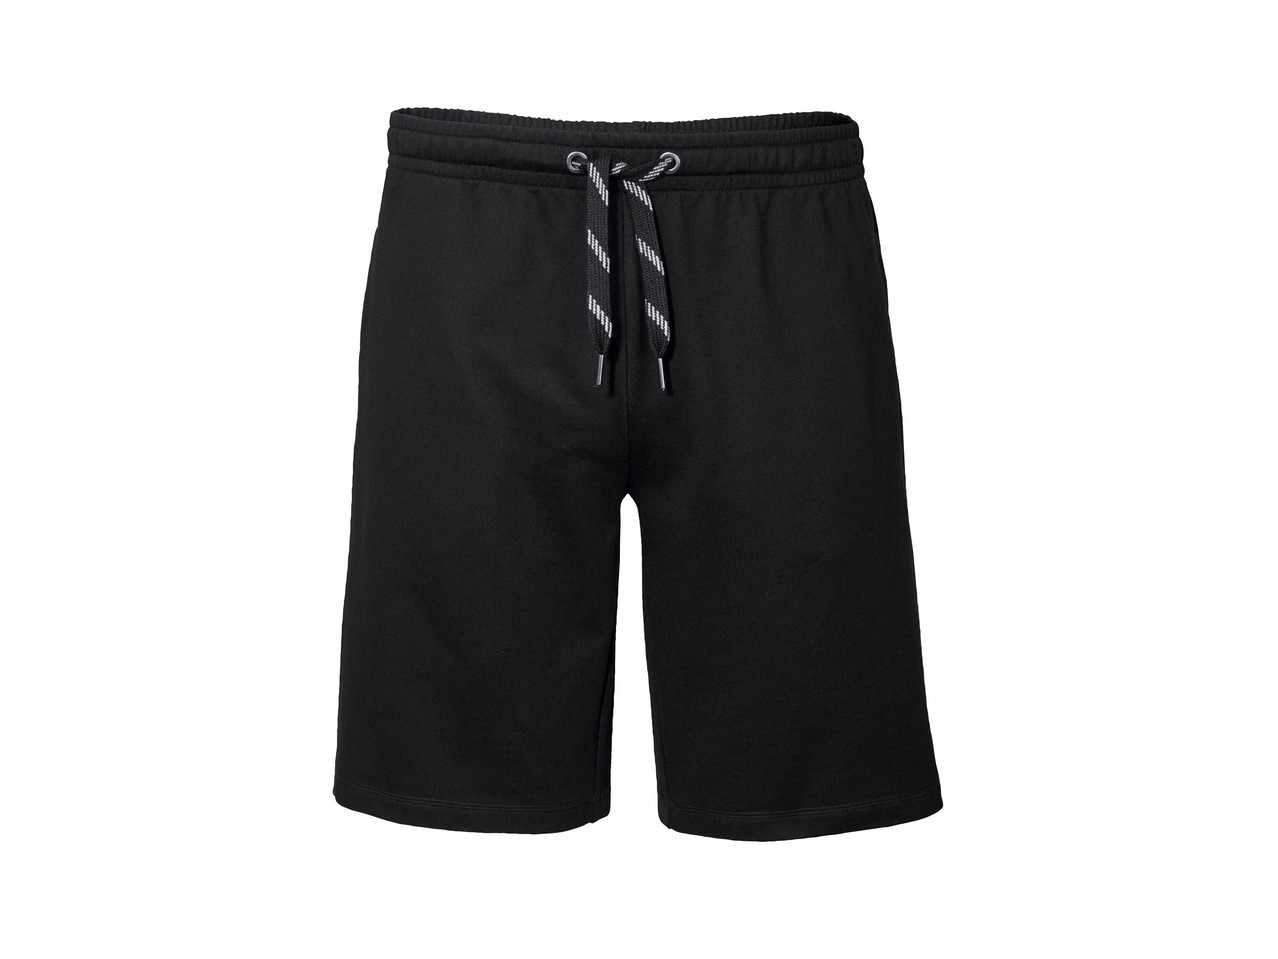 CRIVIT Men's Sweat Shorts